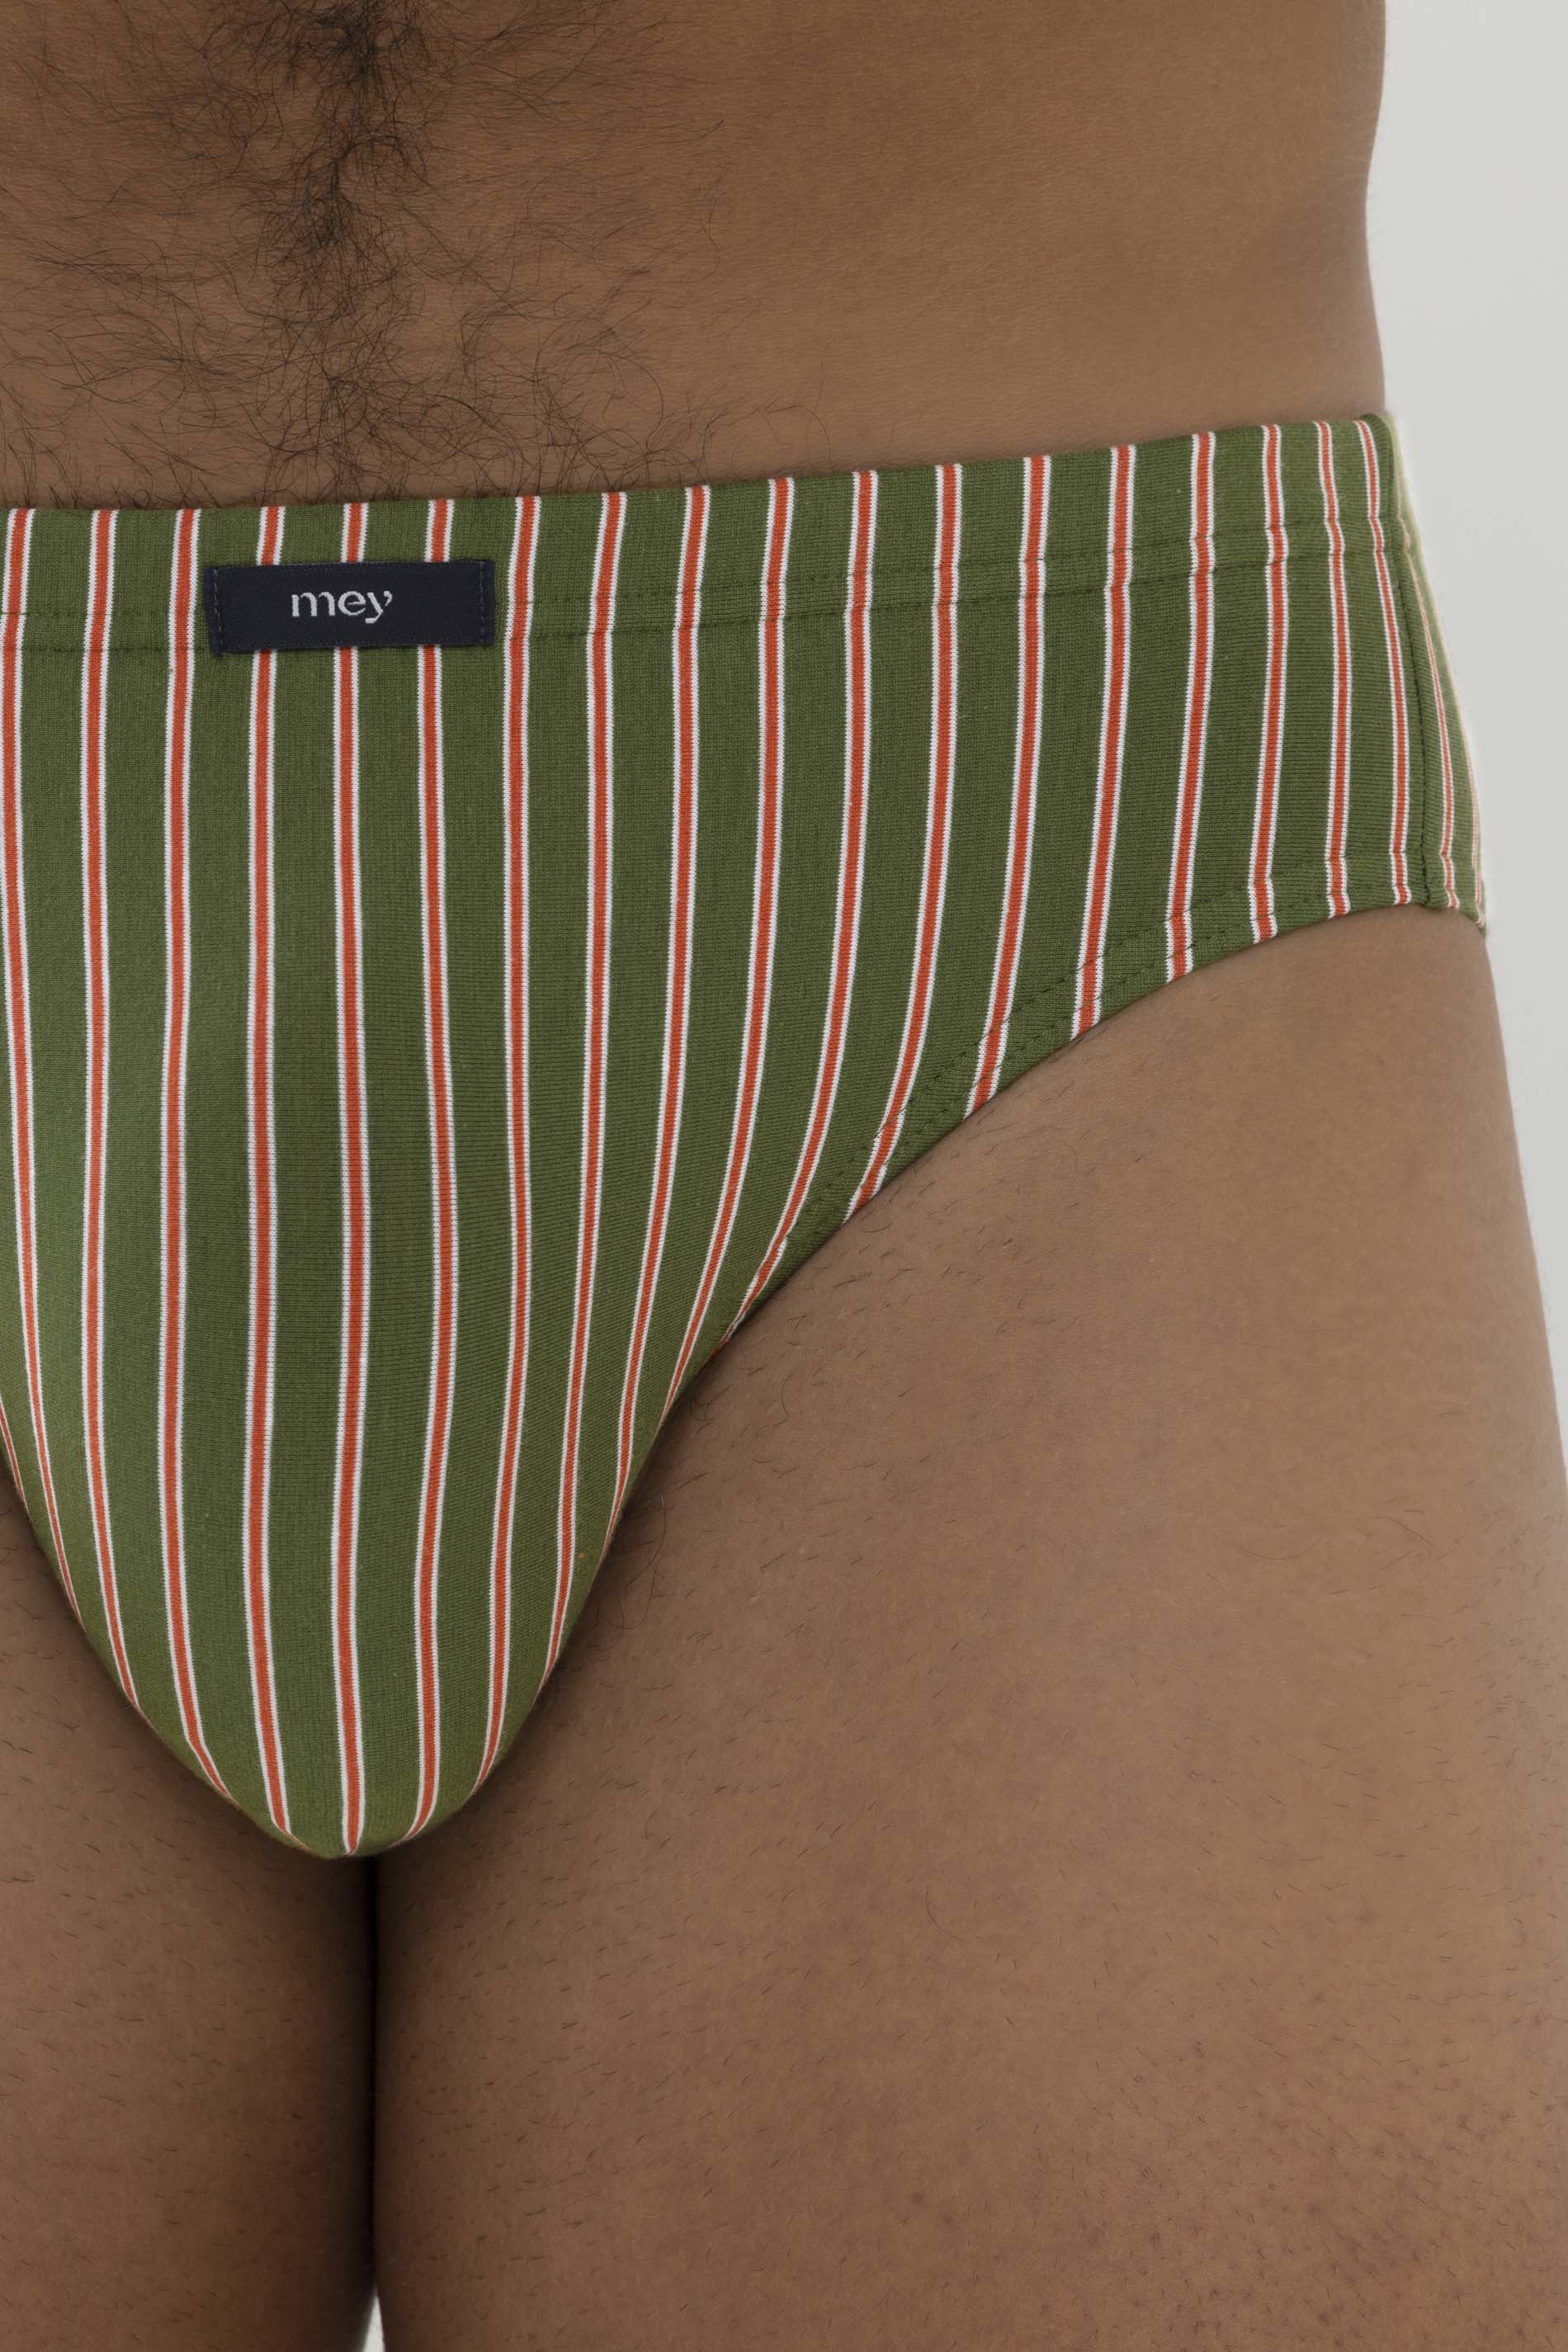 Jazz Pants Serie Stripes Detailansicht 01 | mey®